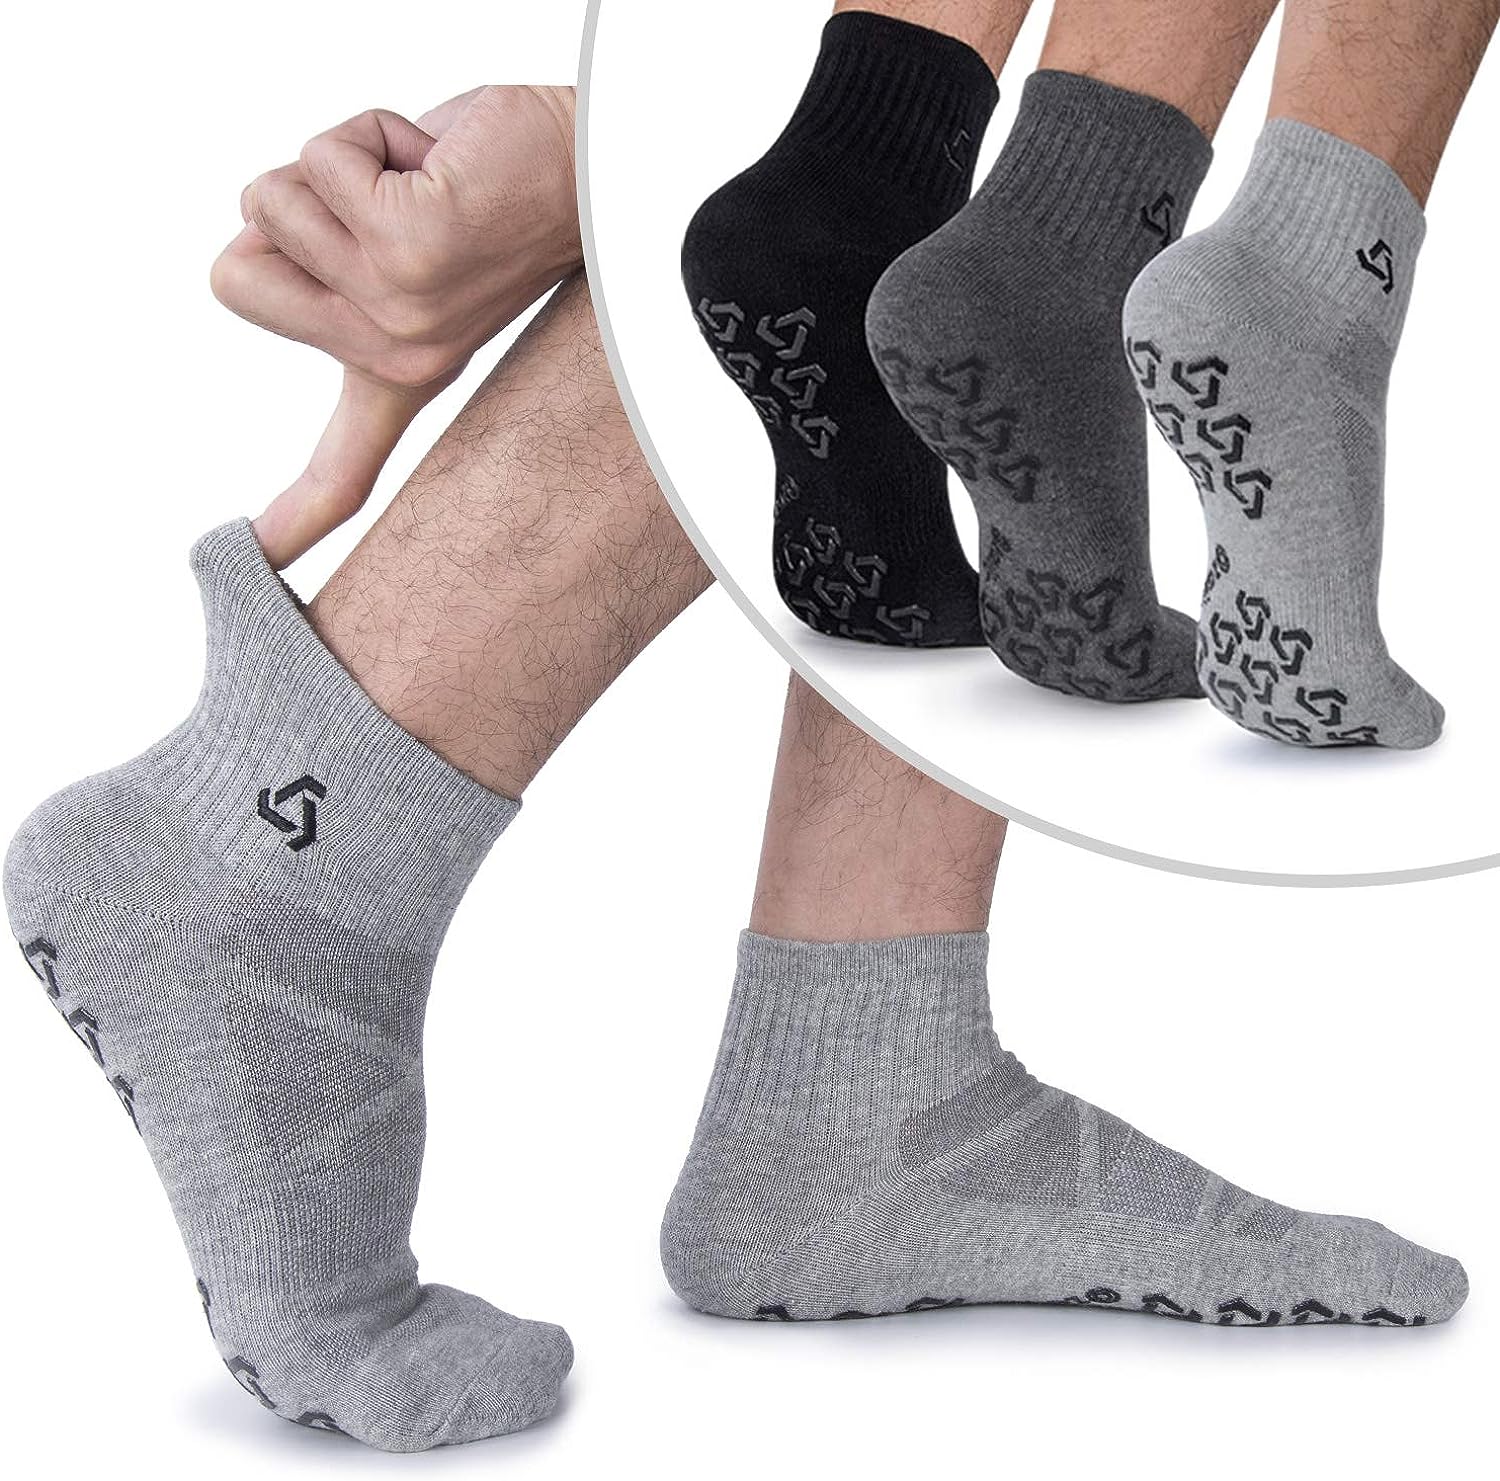  Ozaiic Non Slip Grip Socks for Yoga Home Workout Pure